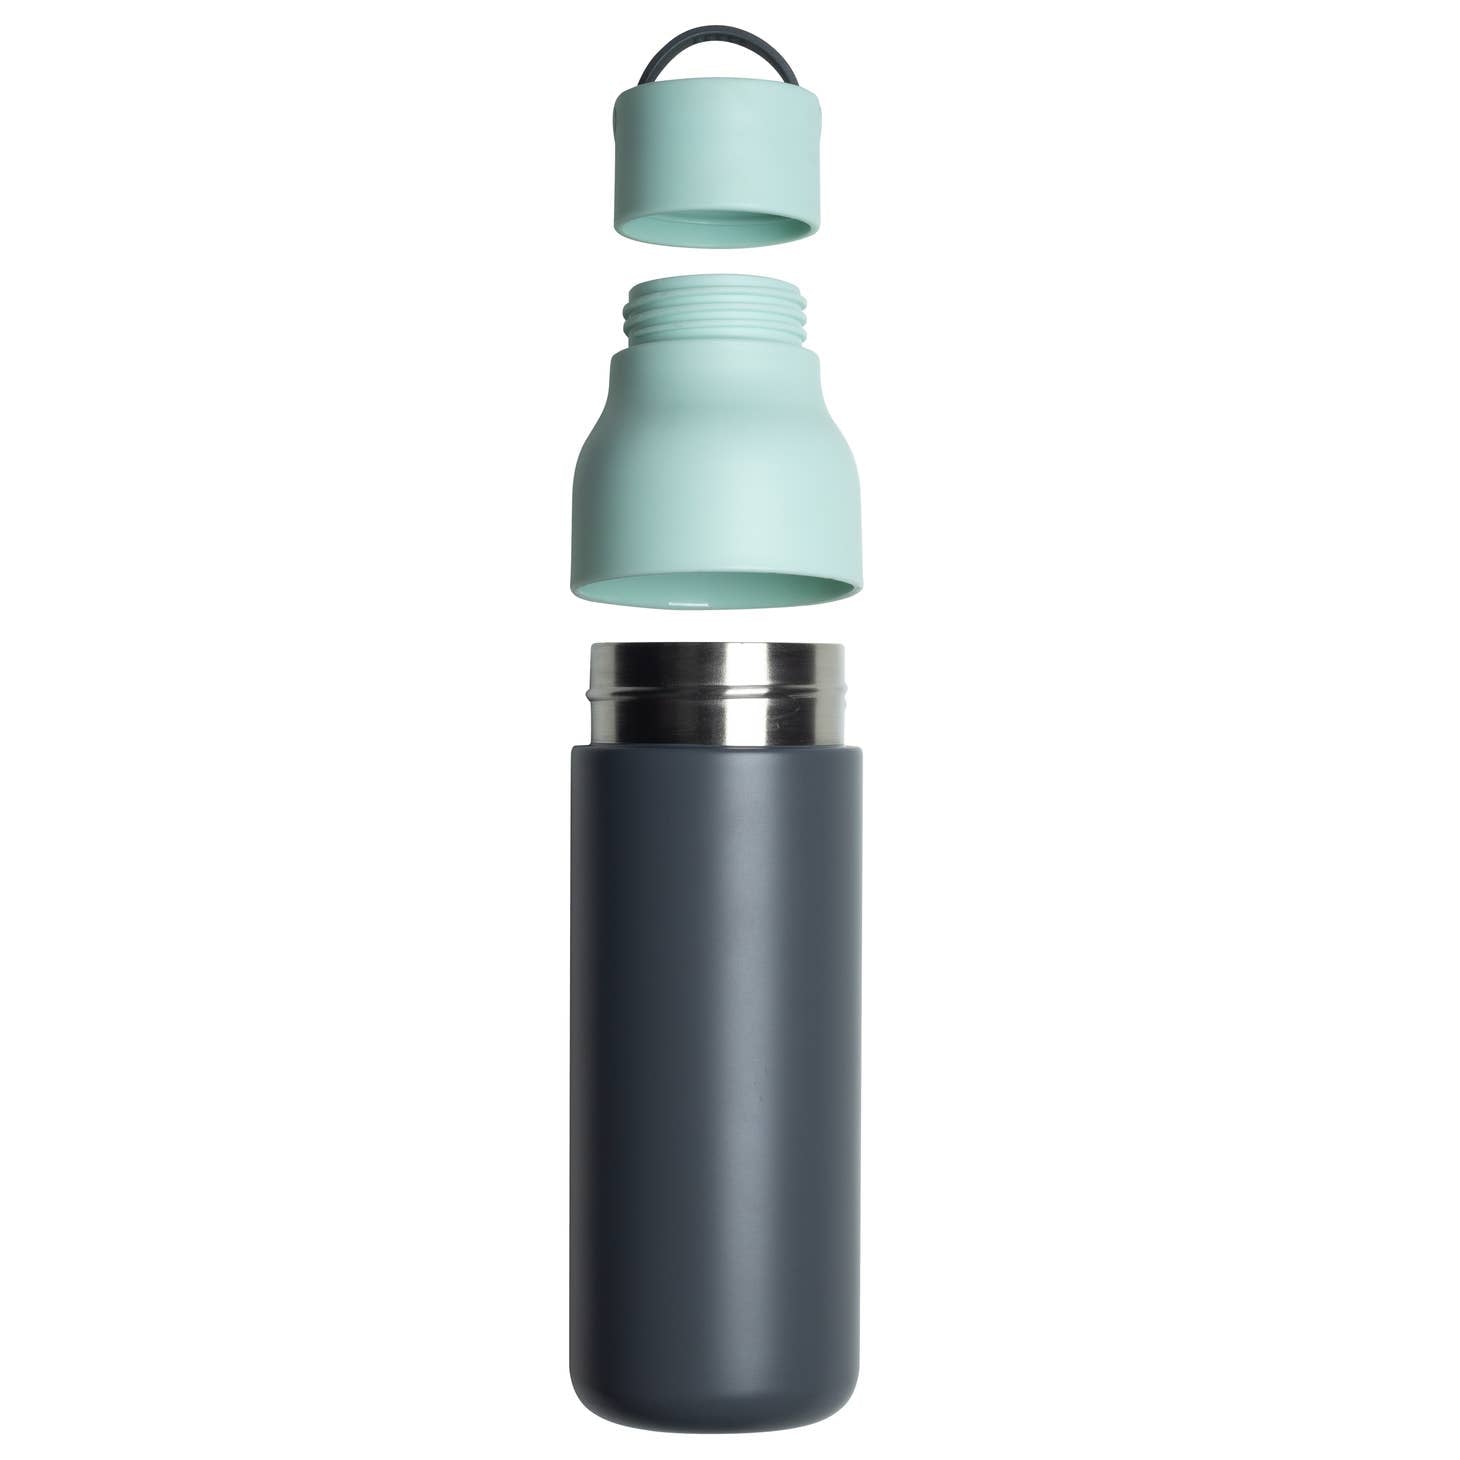 Active Water Bottle 500ml - Grey & Mint